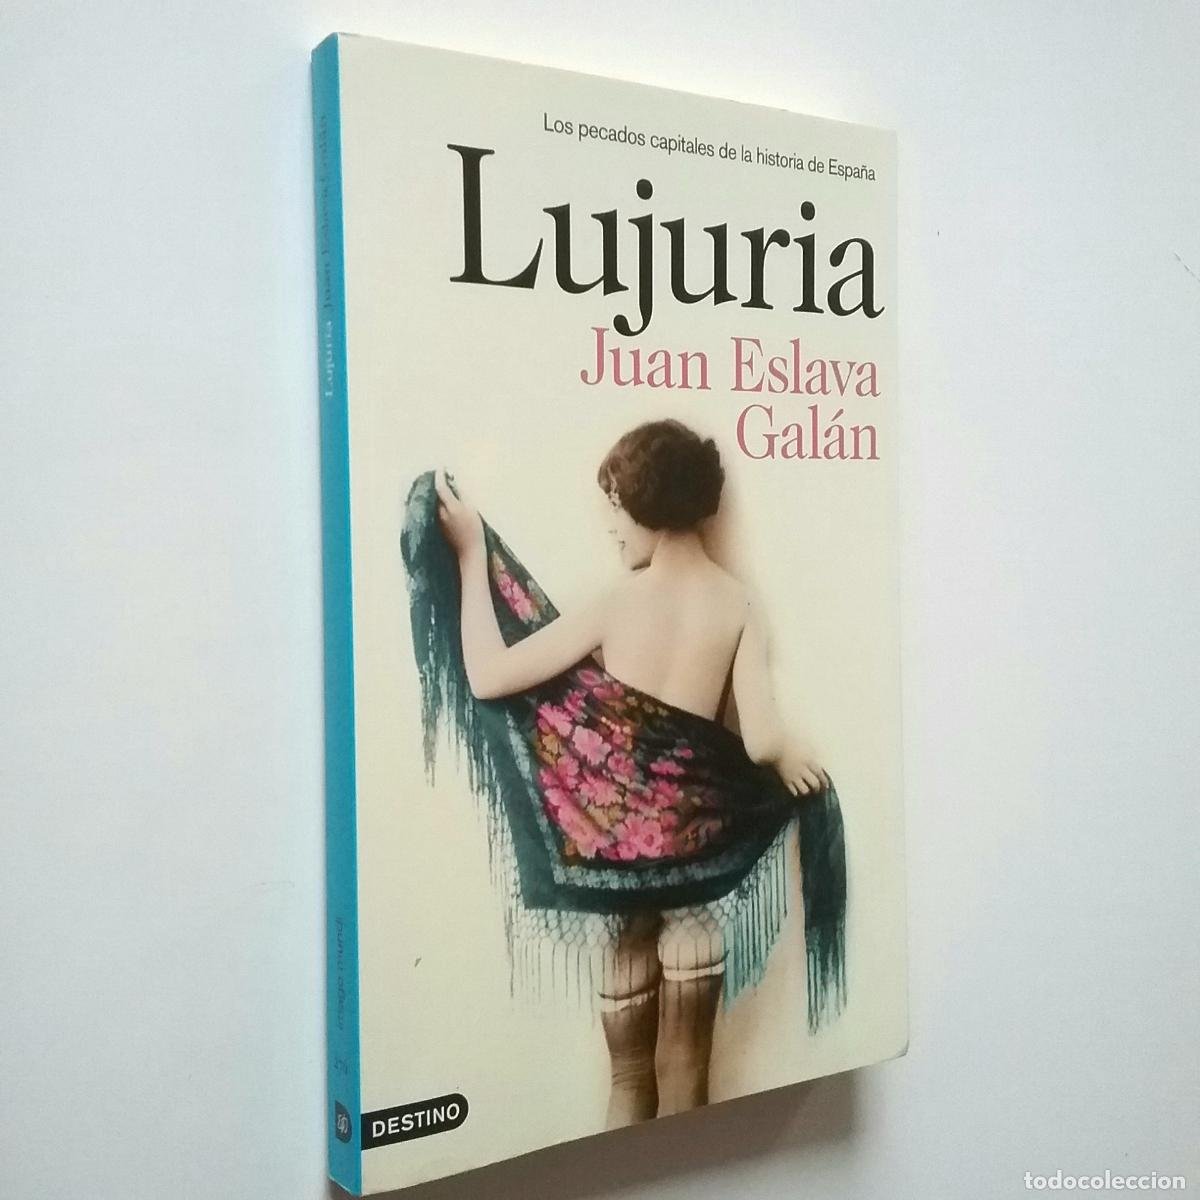 juan eslava galan - lujuria y avaricia (2 libro - Acheter Autres livres de  littérature d'occasion sur todocoleccion